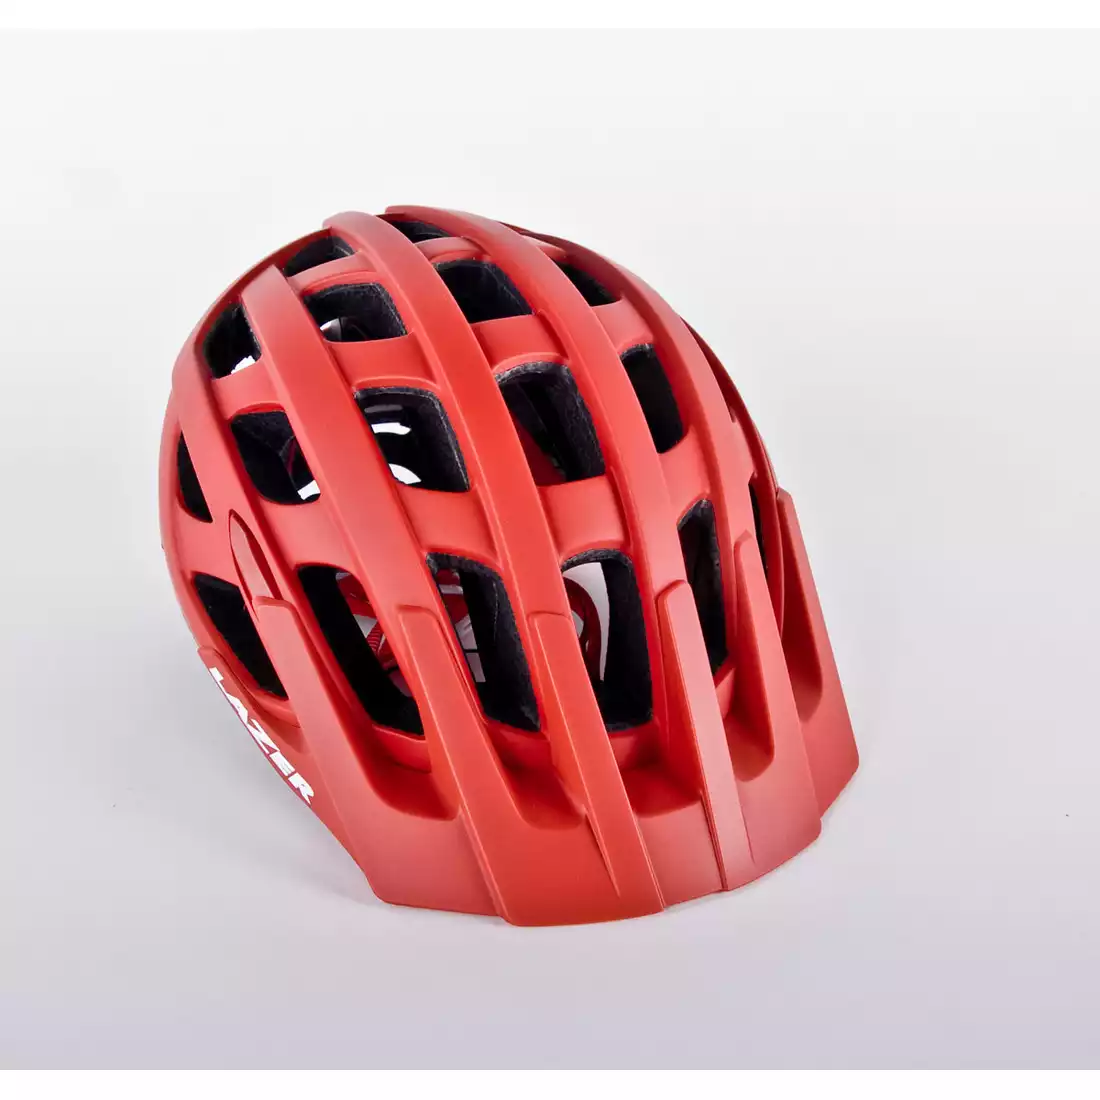 LAZER ROLLER MTB kask rowerowy TS+ czerwony mat